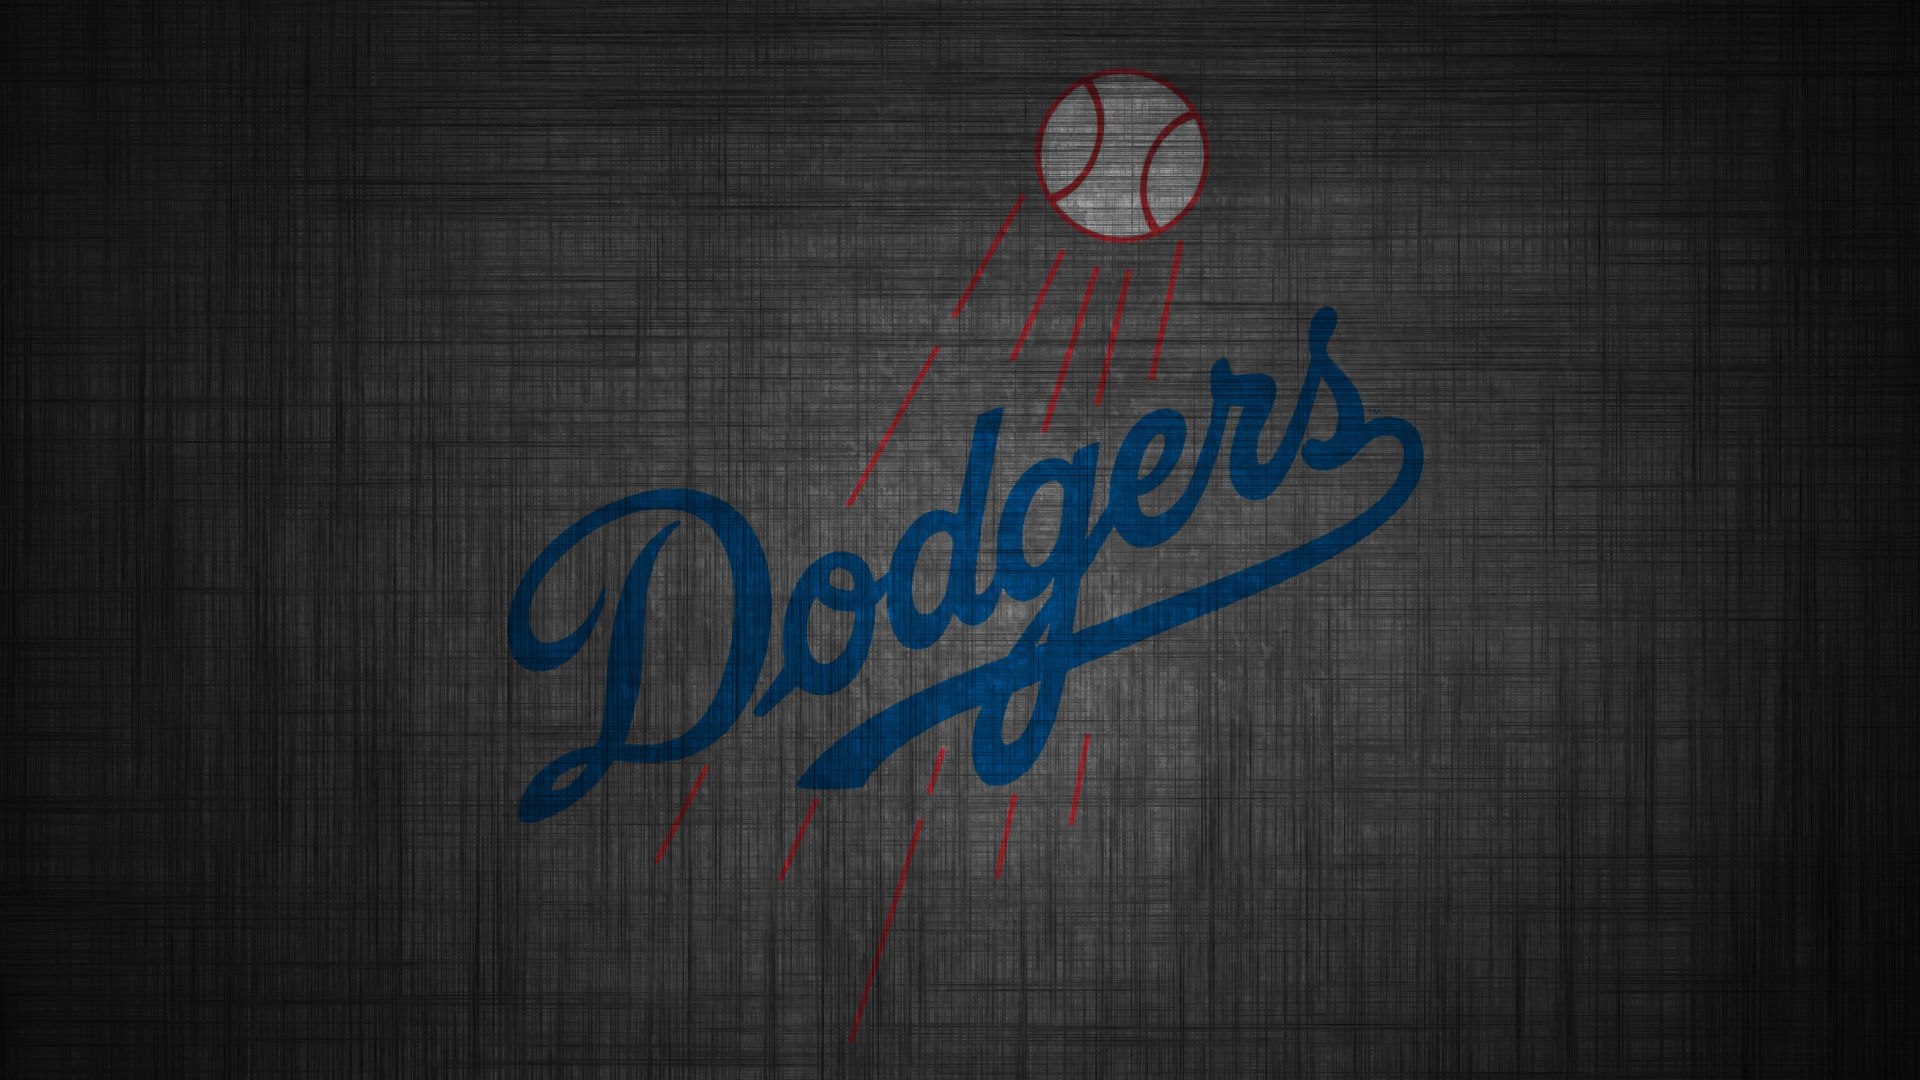 Los Angeles Dodgers Wallpaper Ligc1zn Px 4usky